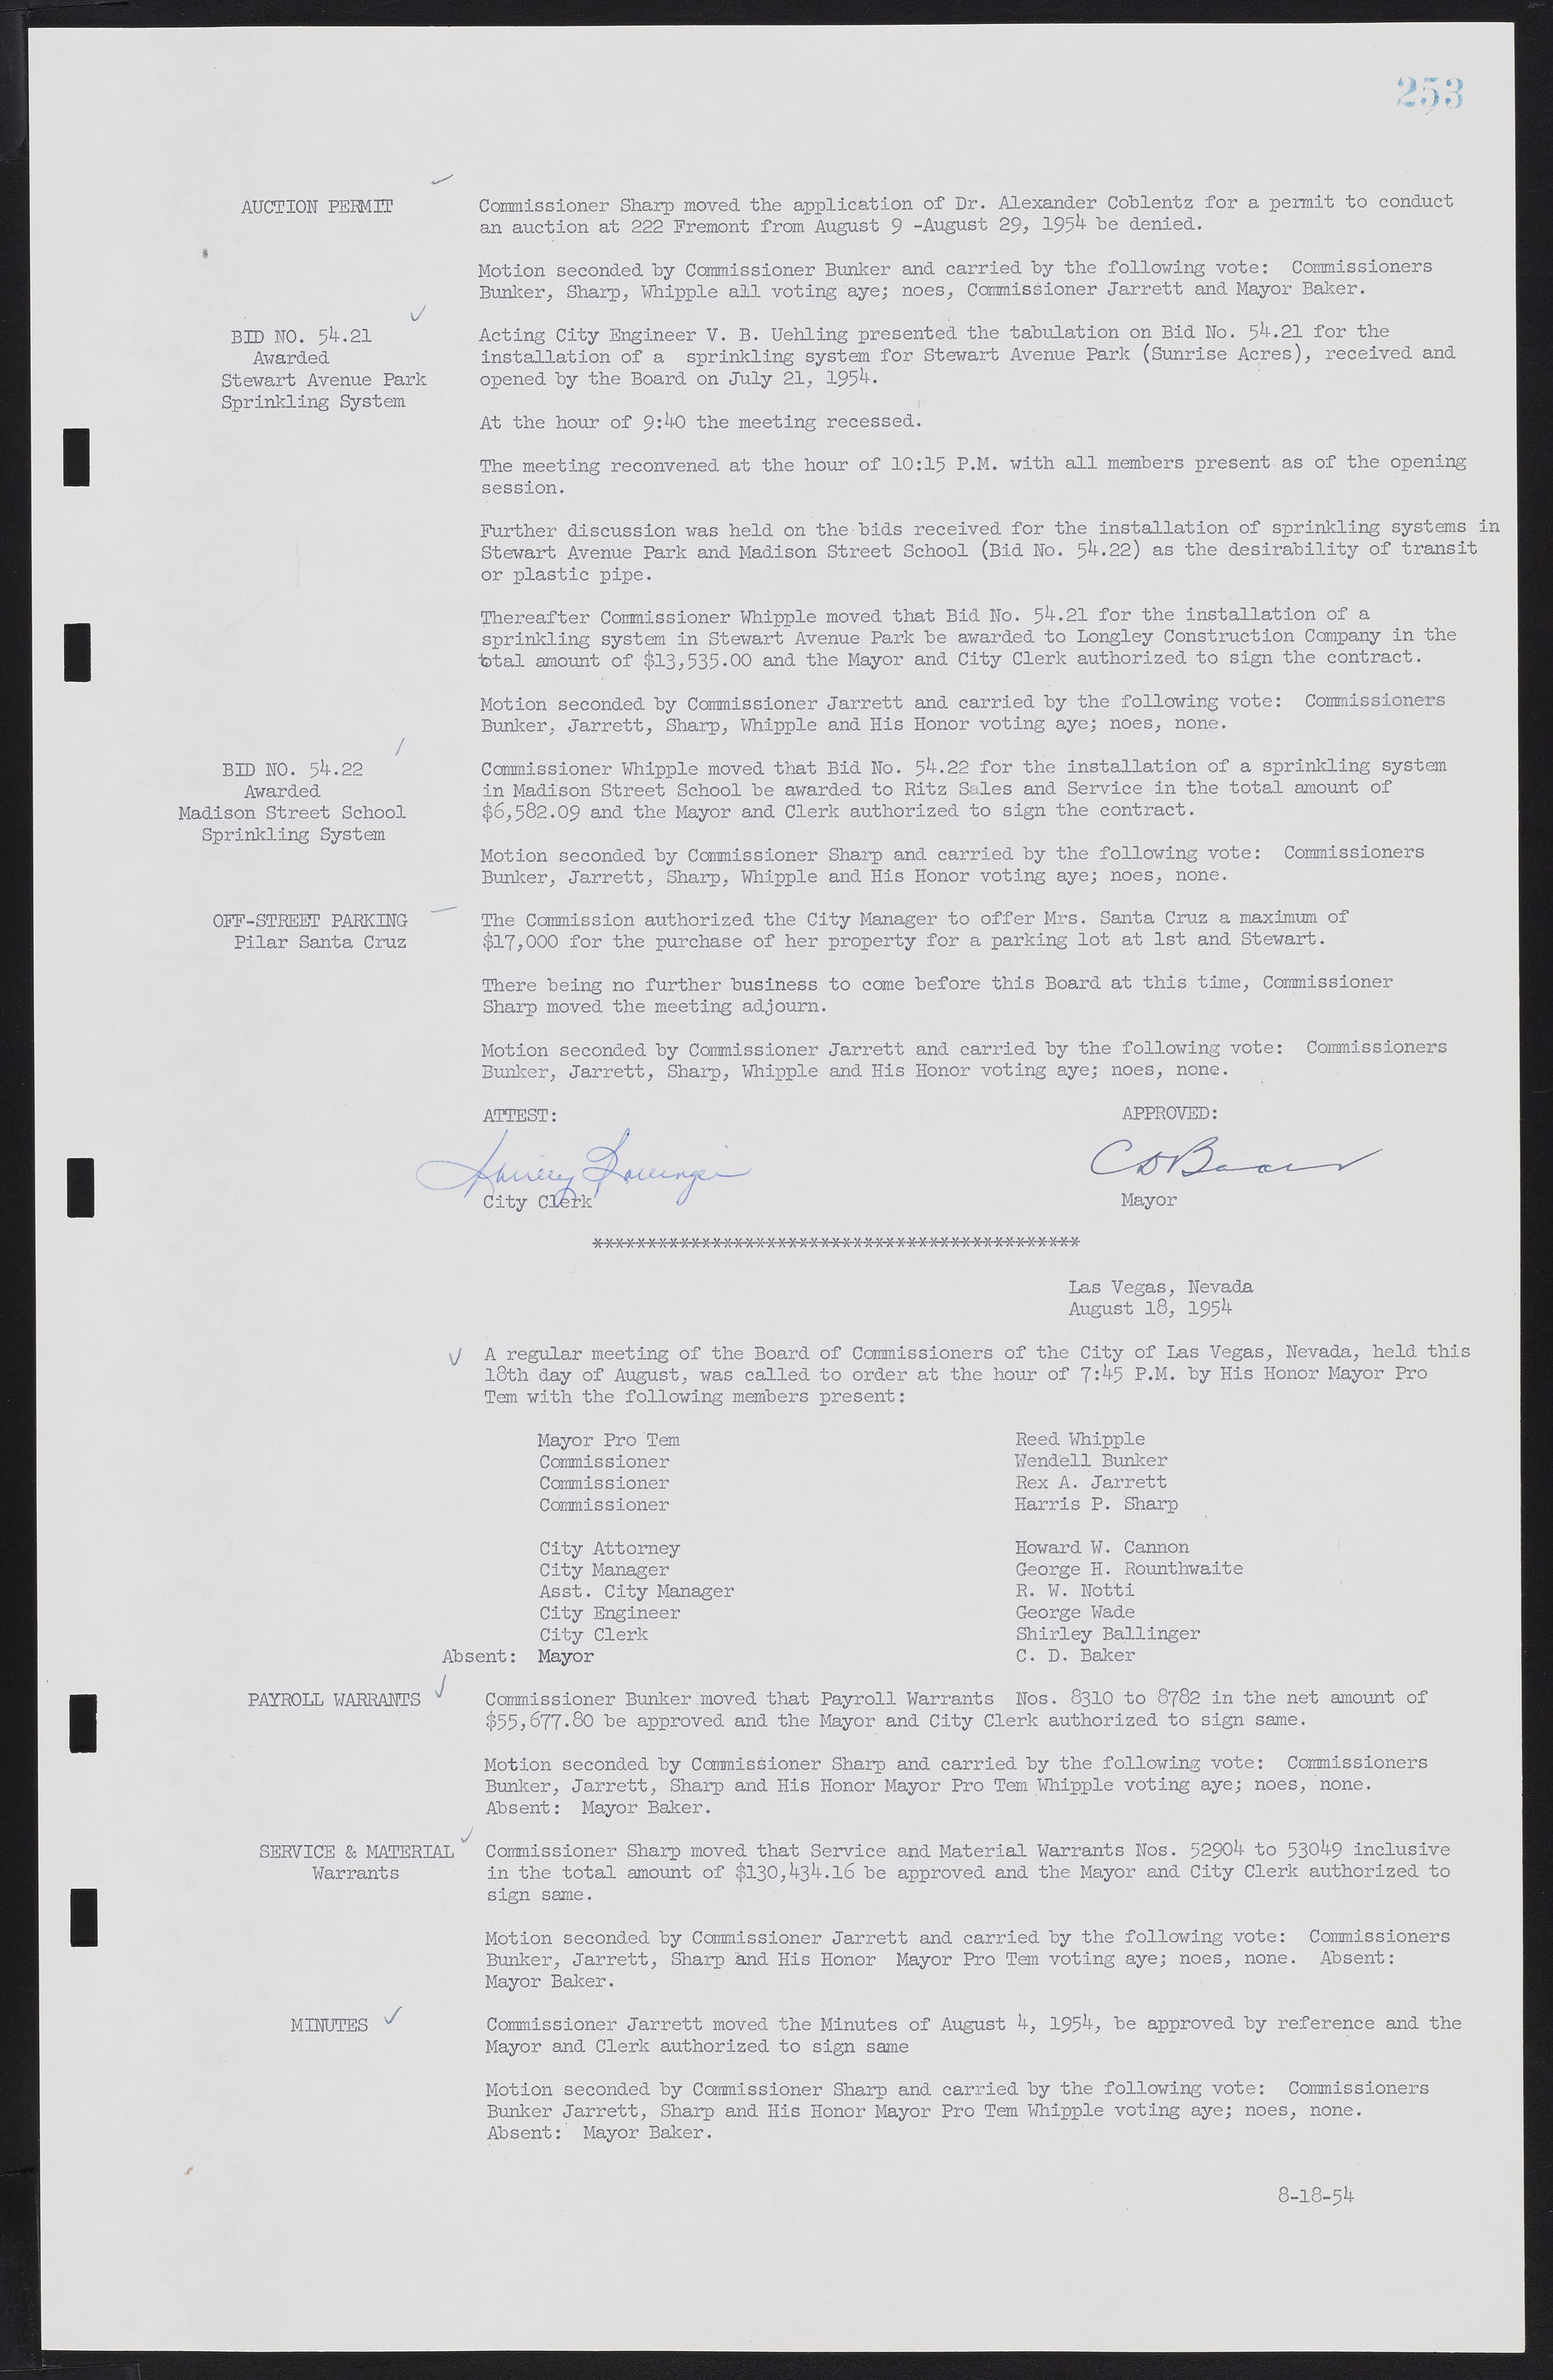 Las Vegas City Commission Minutes, February 17, 1954 to September 21, 1955, lvc000009-259